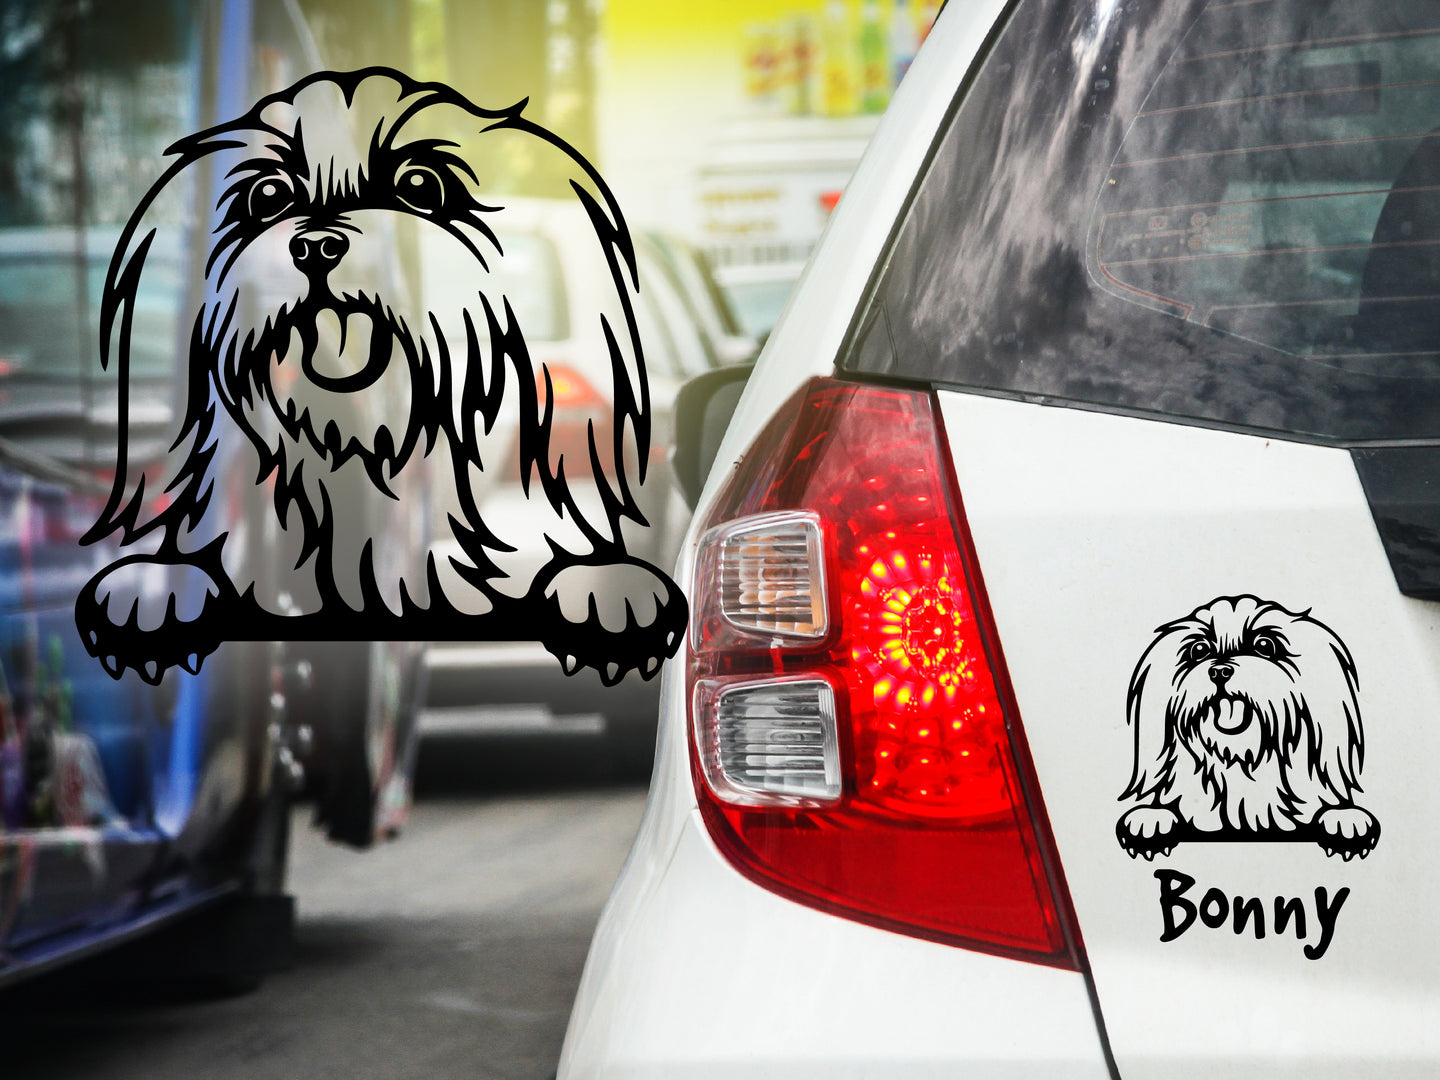 Autoaufkeber Hund Malteser mit Wunschname